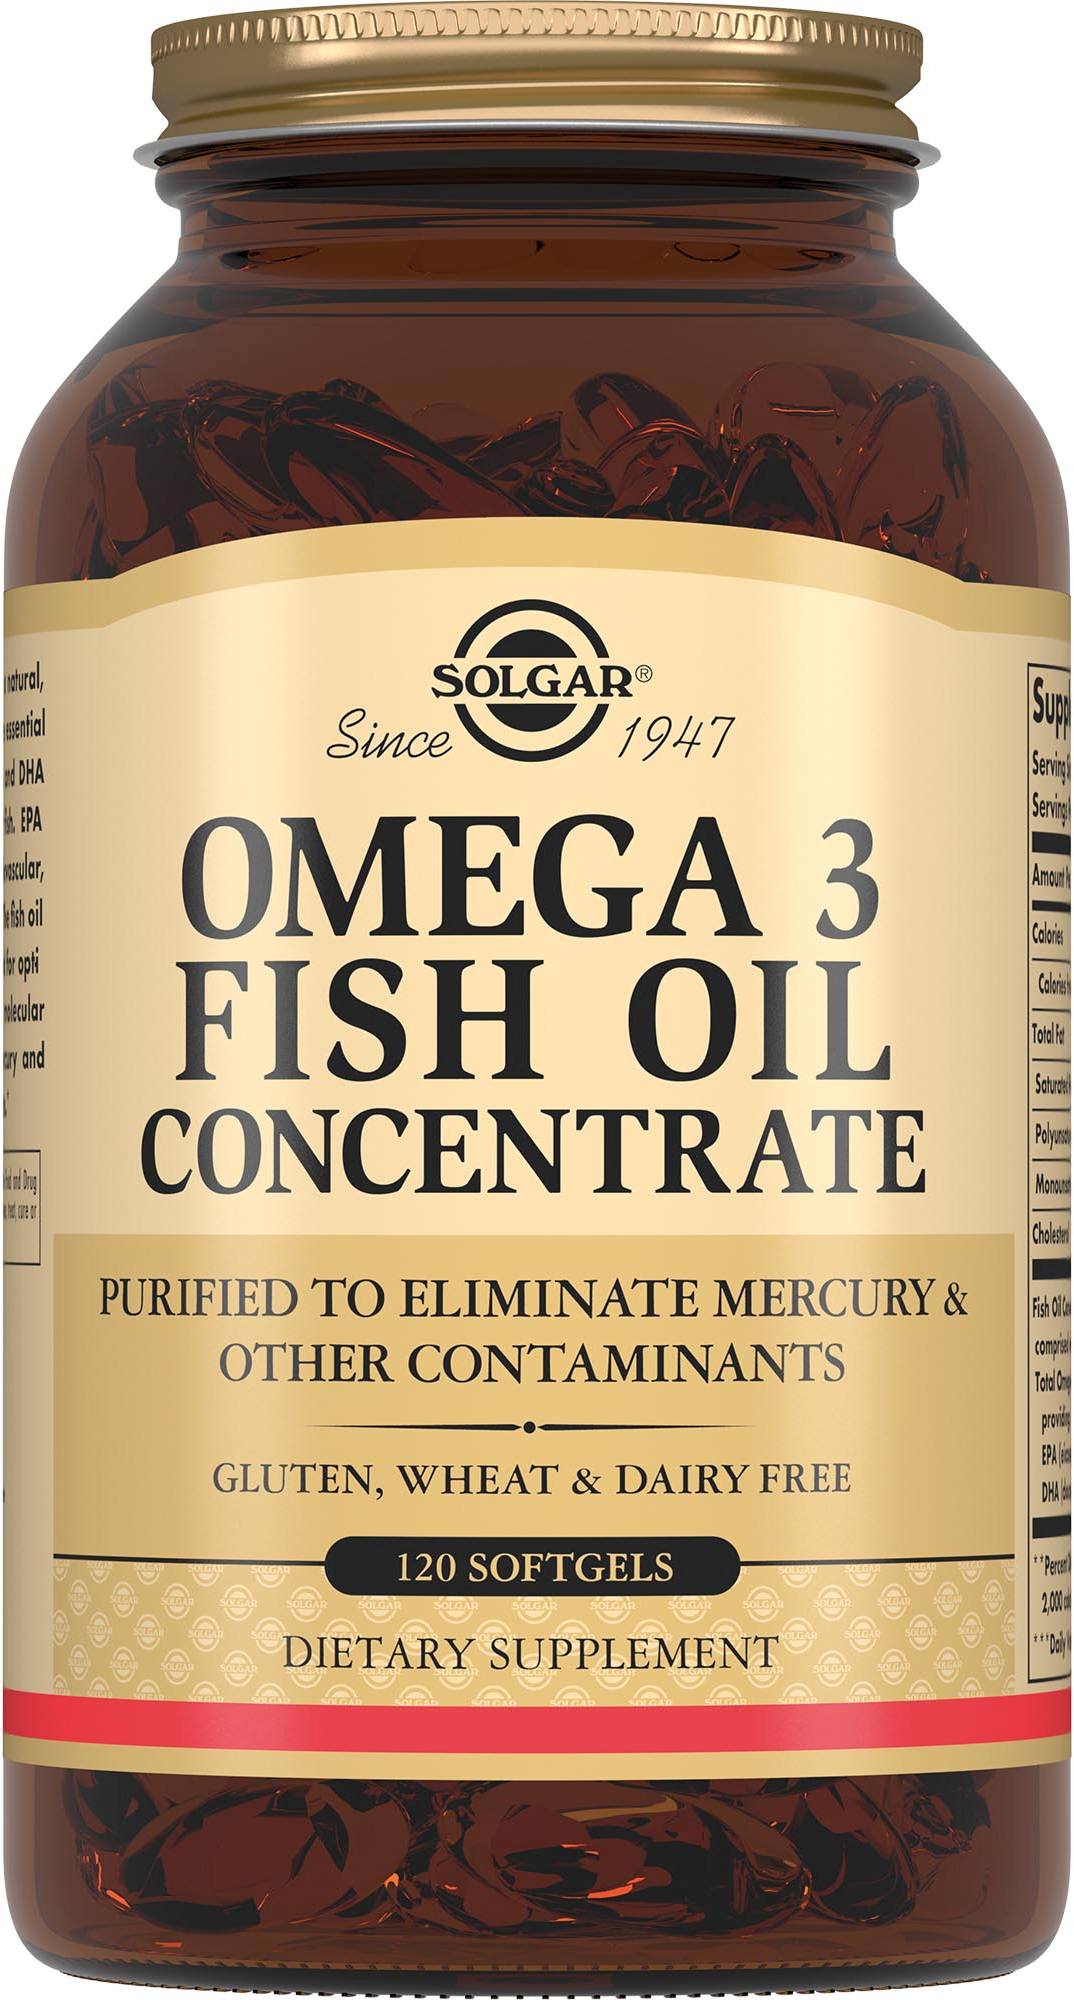 Солгар Концентрат рыбьего жира Омега-3, капсулы, 120 шт. solgar omega 3 fish oil concentrate концентрат рыбьего жира омега 3 в капсулах 60 шт